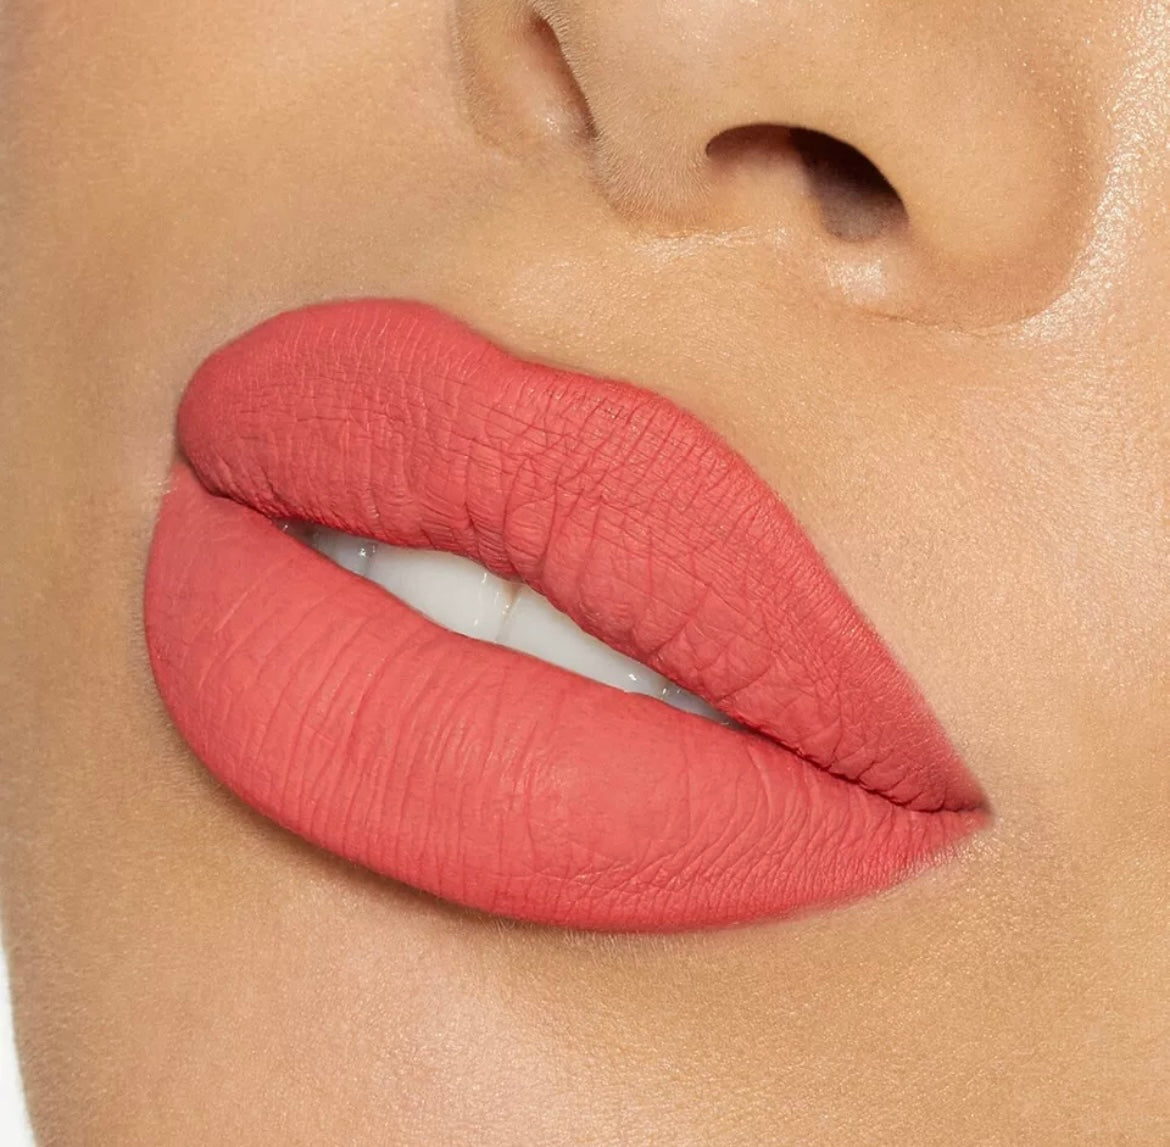 Official Kylie Jenner Lipstick & Beauty Blender Bundle - Various Shades